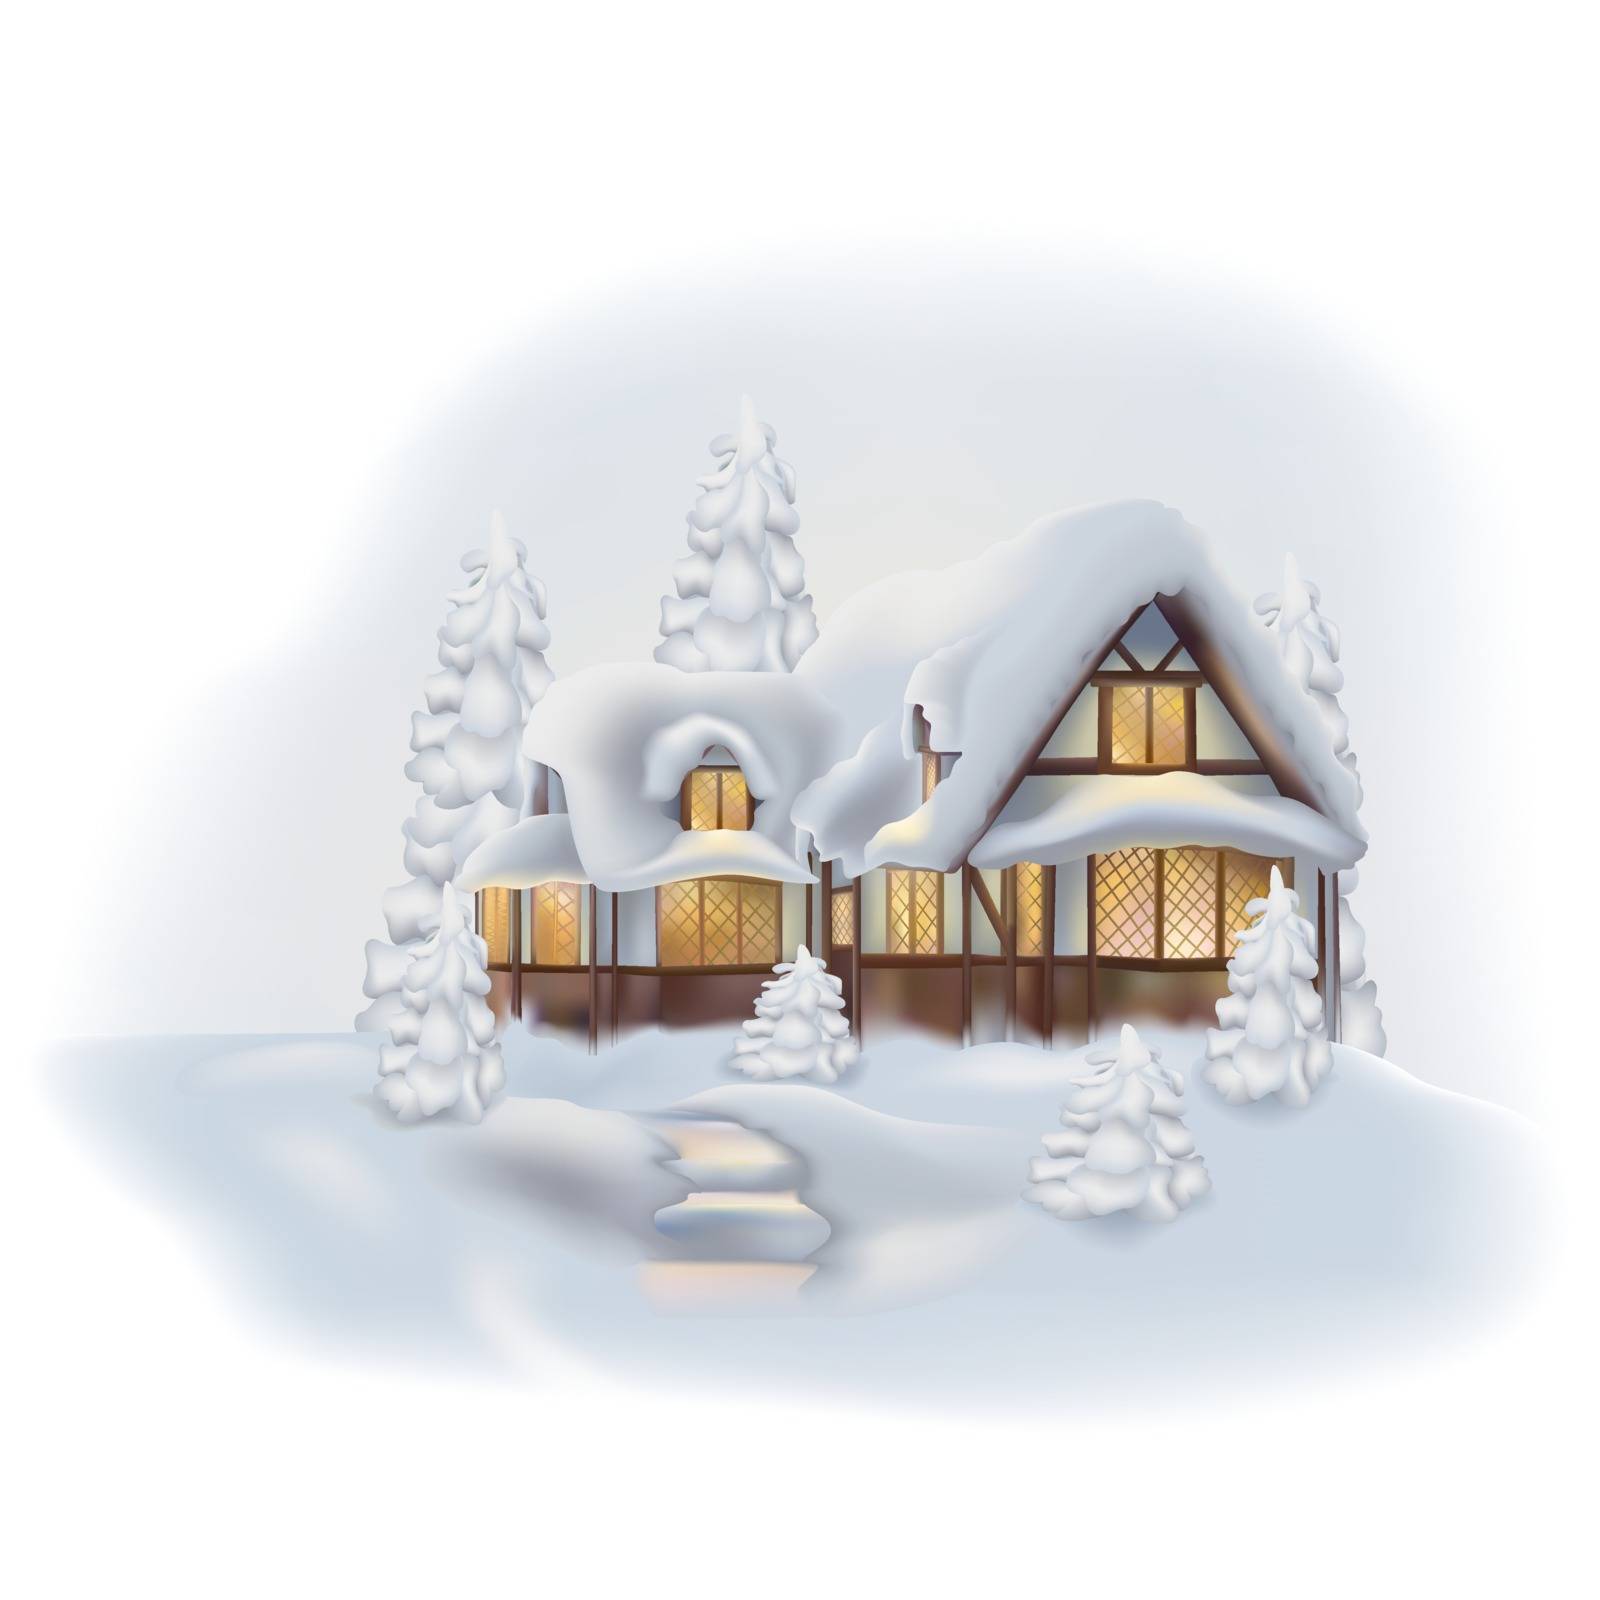 Snowy Cottage by illustratorCZ